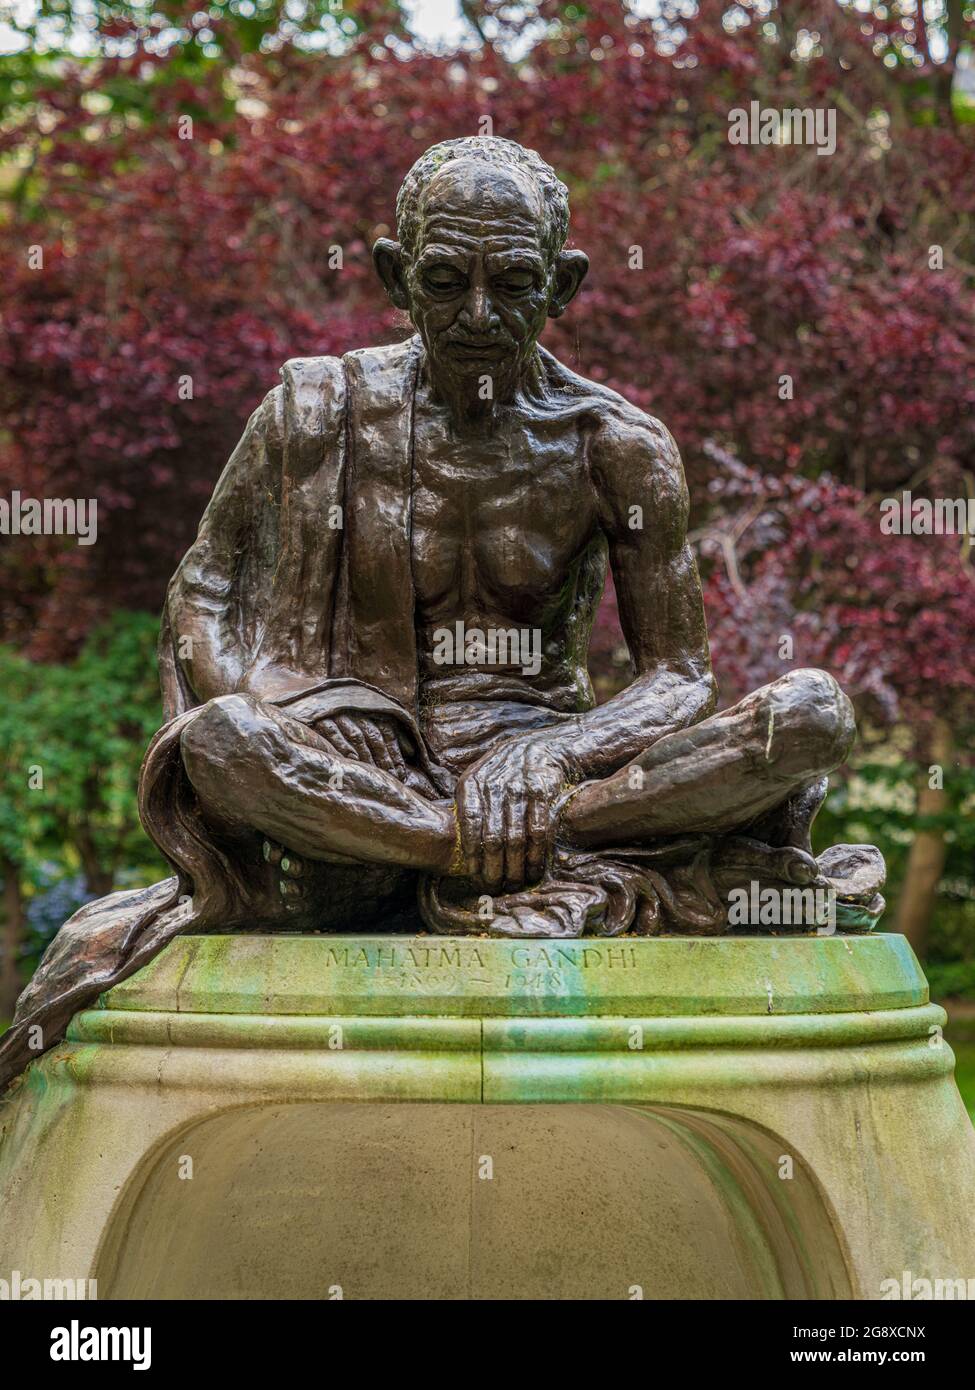 Mahatma Gandhi statue en Tavistock Square Gardens Bloomsbury Londres. Sculpté par Fredda brillante et installé en 1968 Banque D'Images